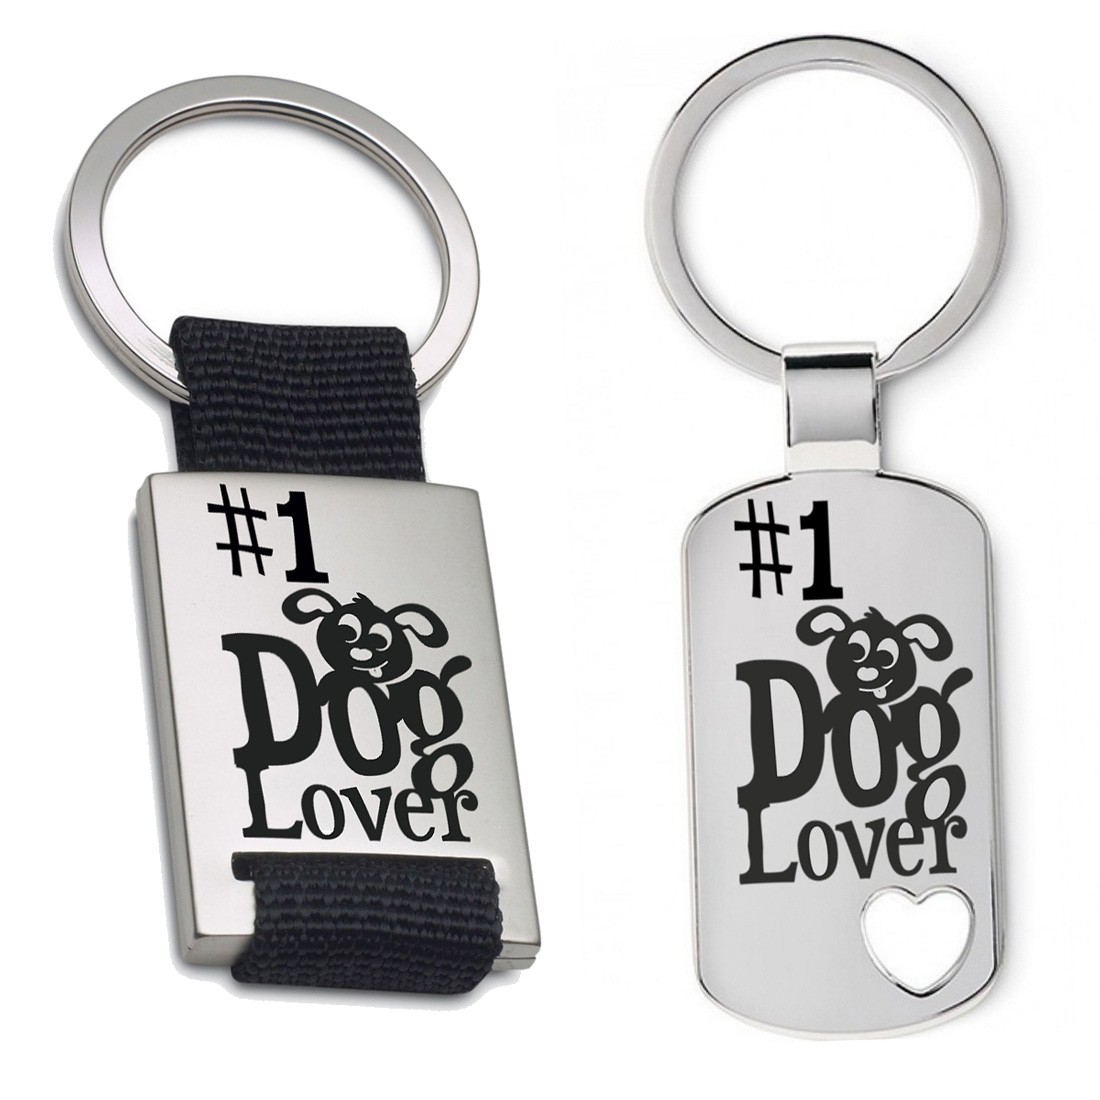 Schlüsselanhänger: #1 Dog lover